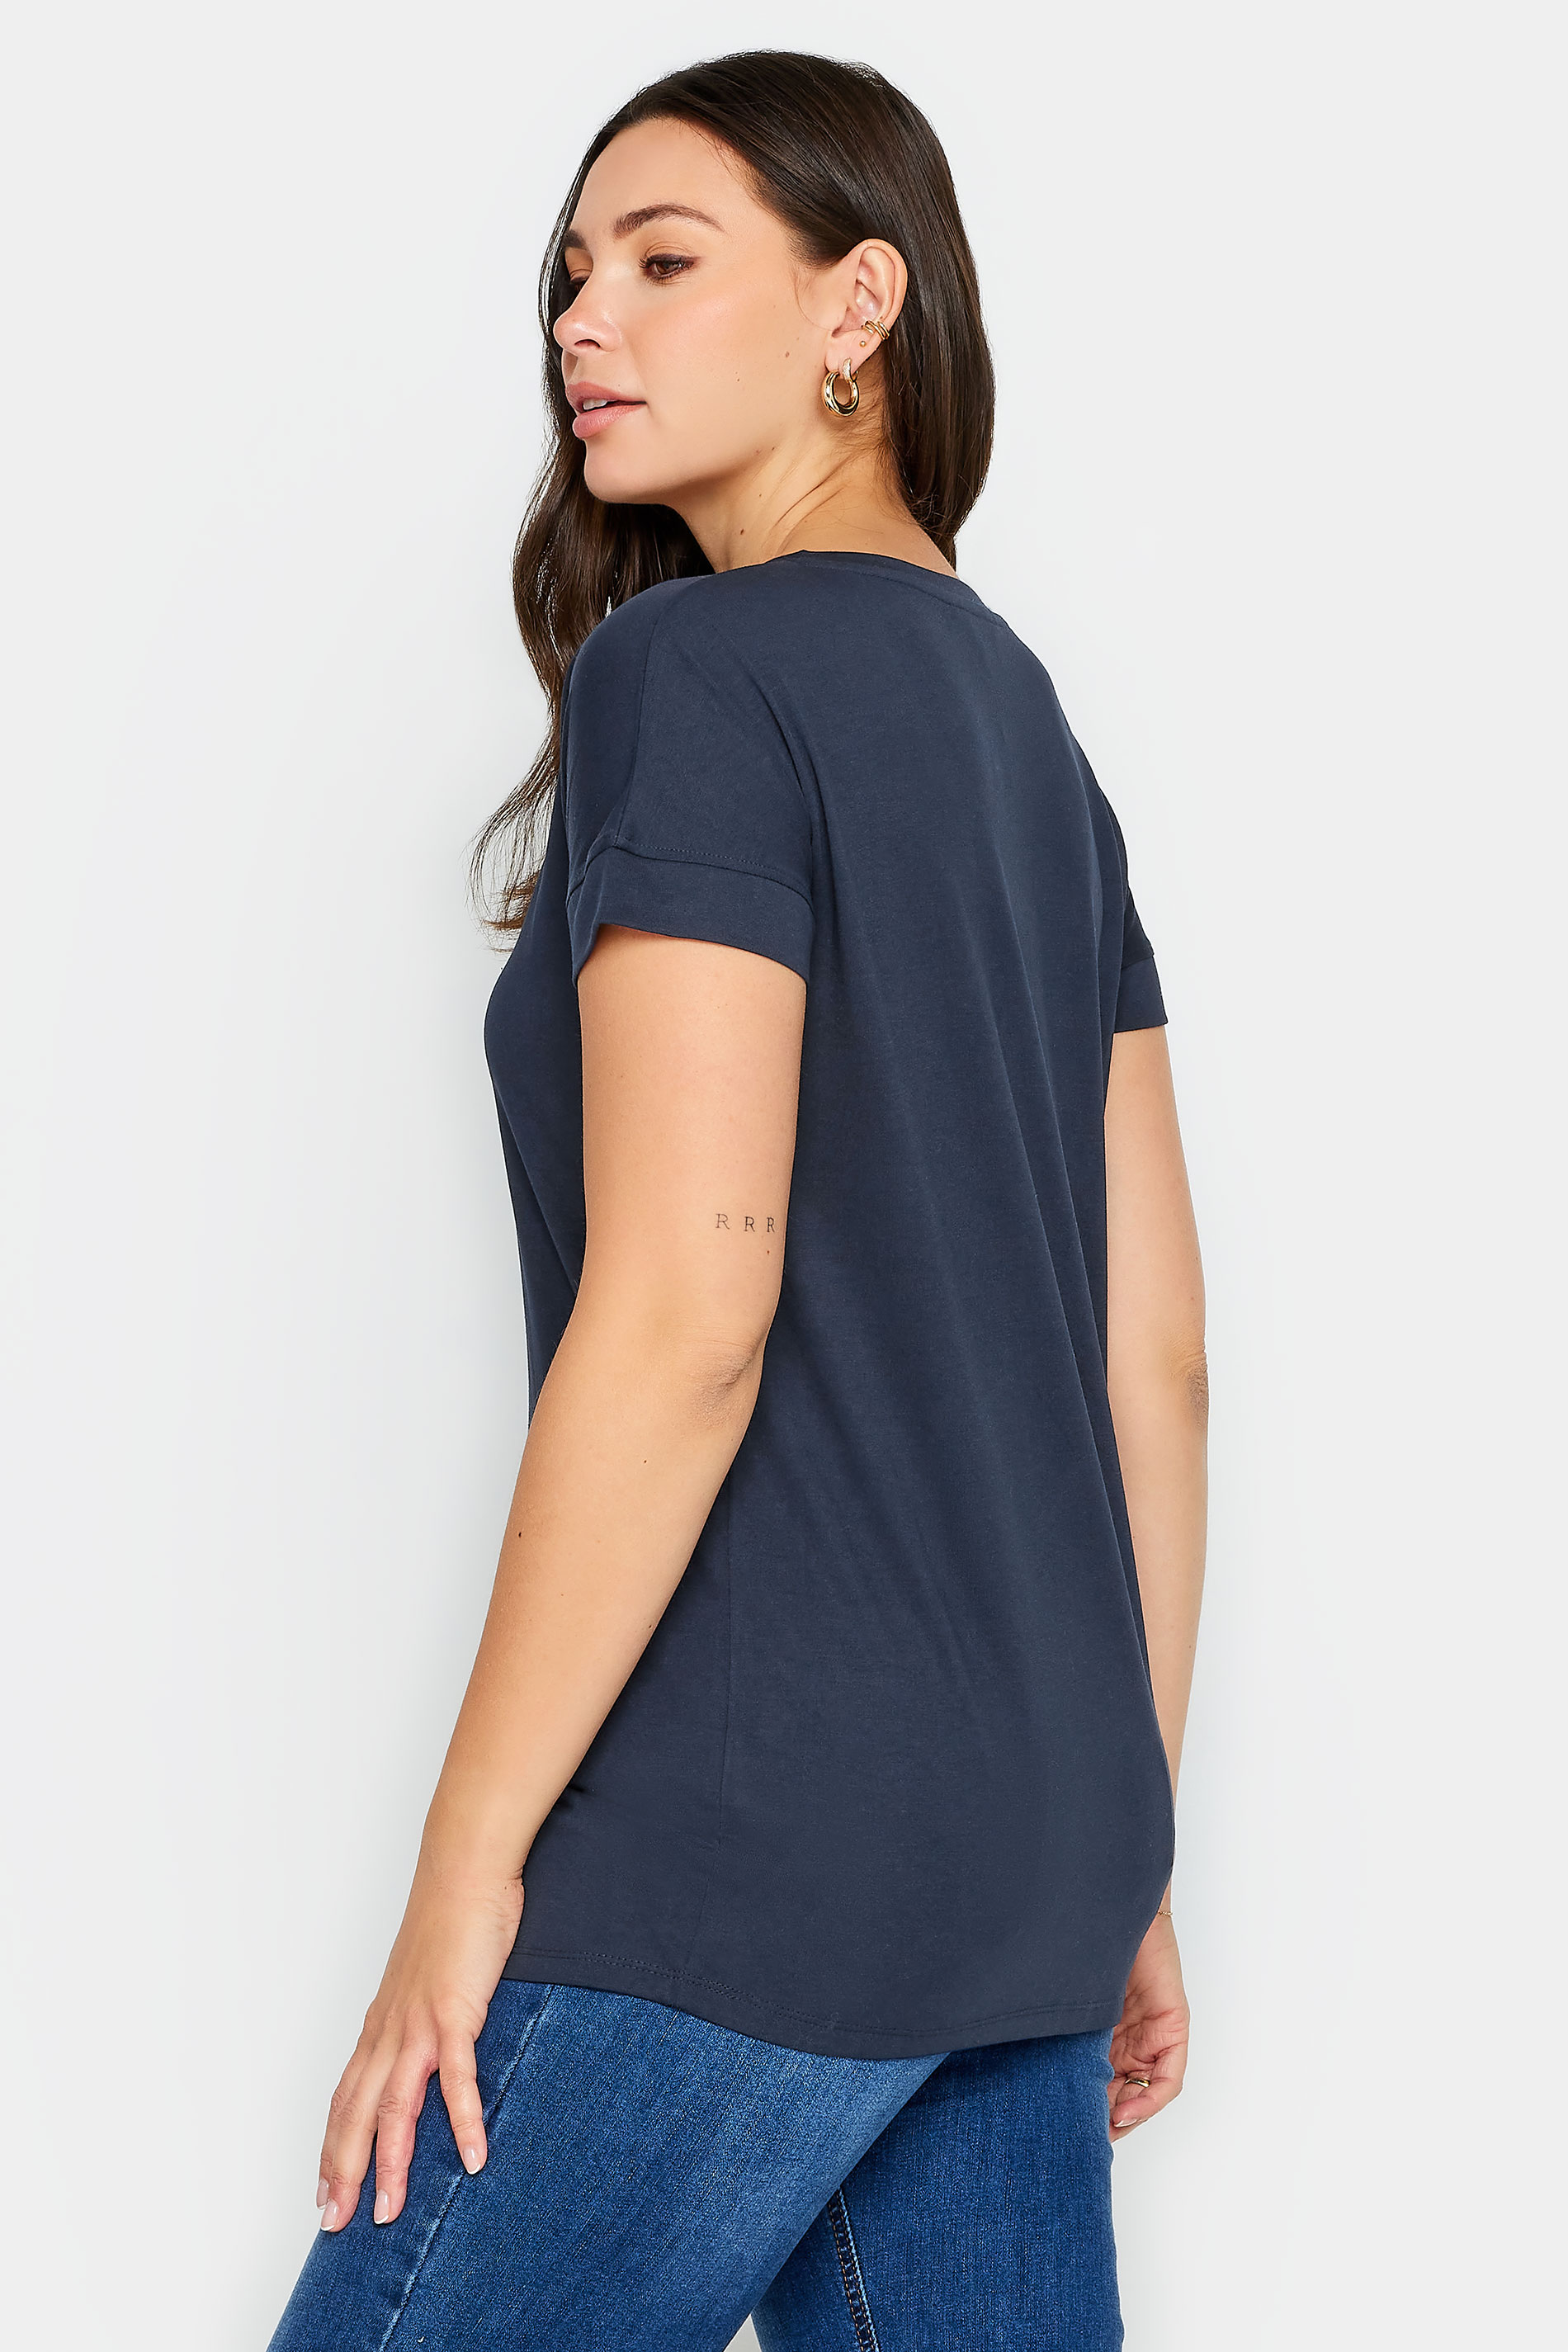 LTS PREMIUM Tall Womens Navy Blue V-Neck T-Shirt | Long Tall Sally 3